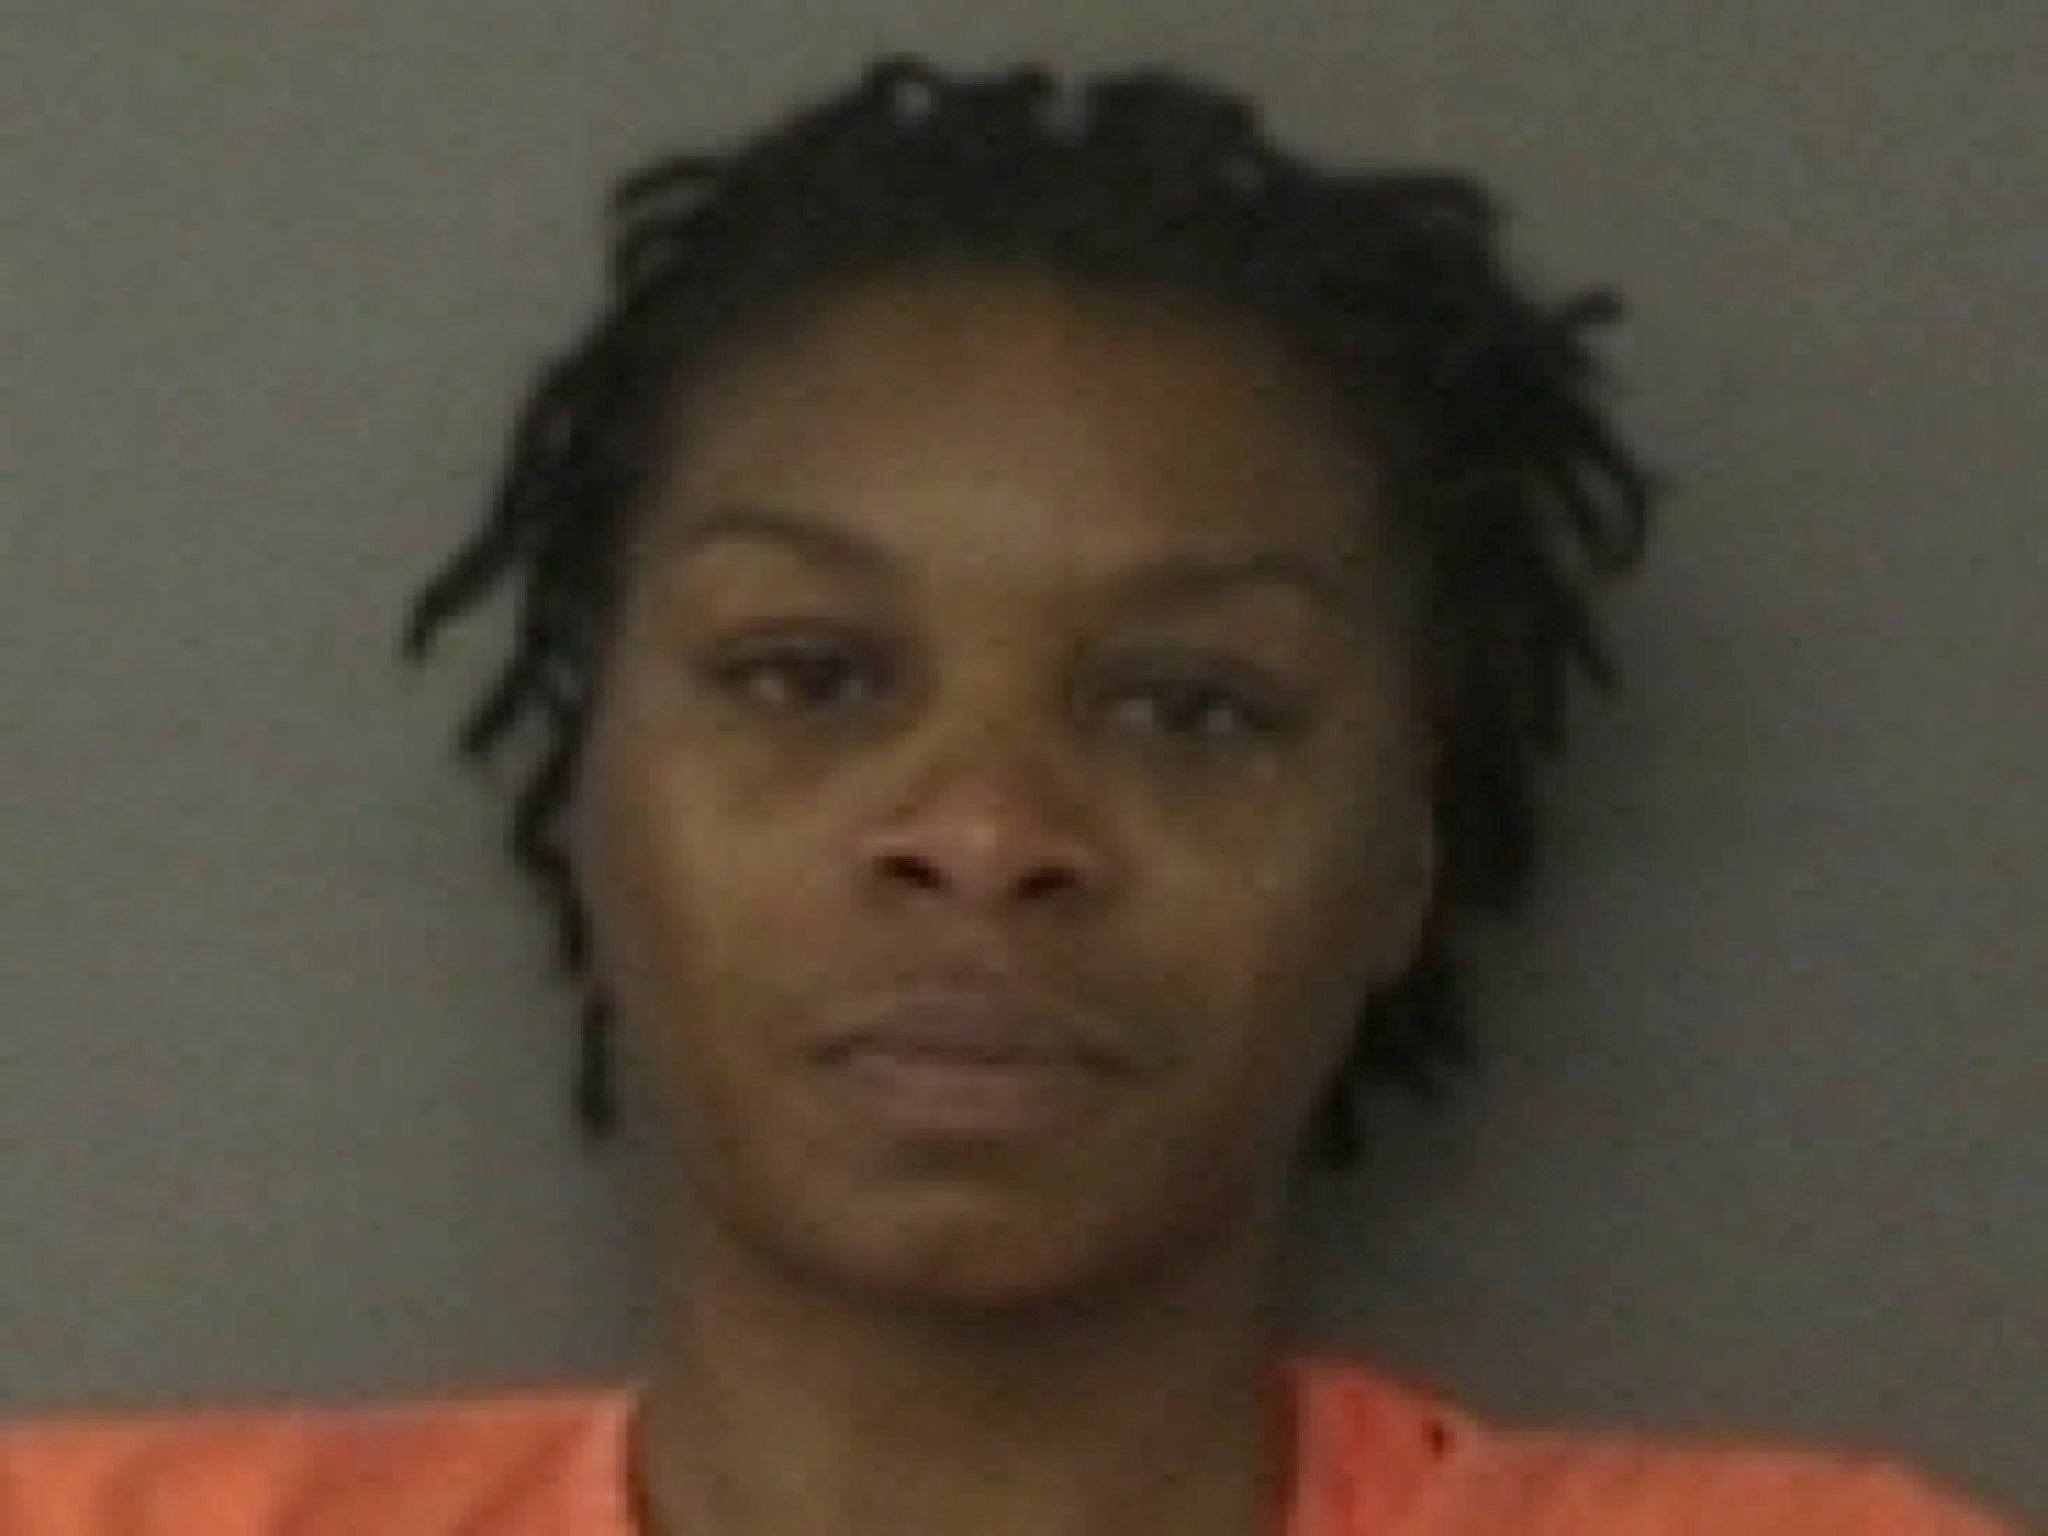 An arrest image of Sandra Bland